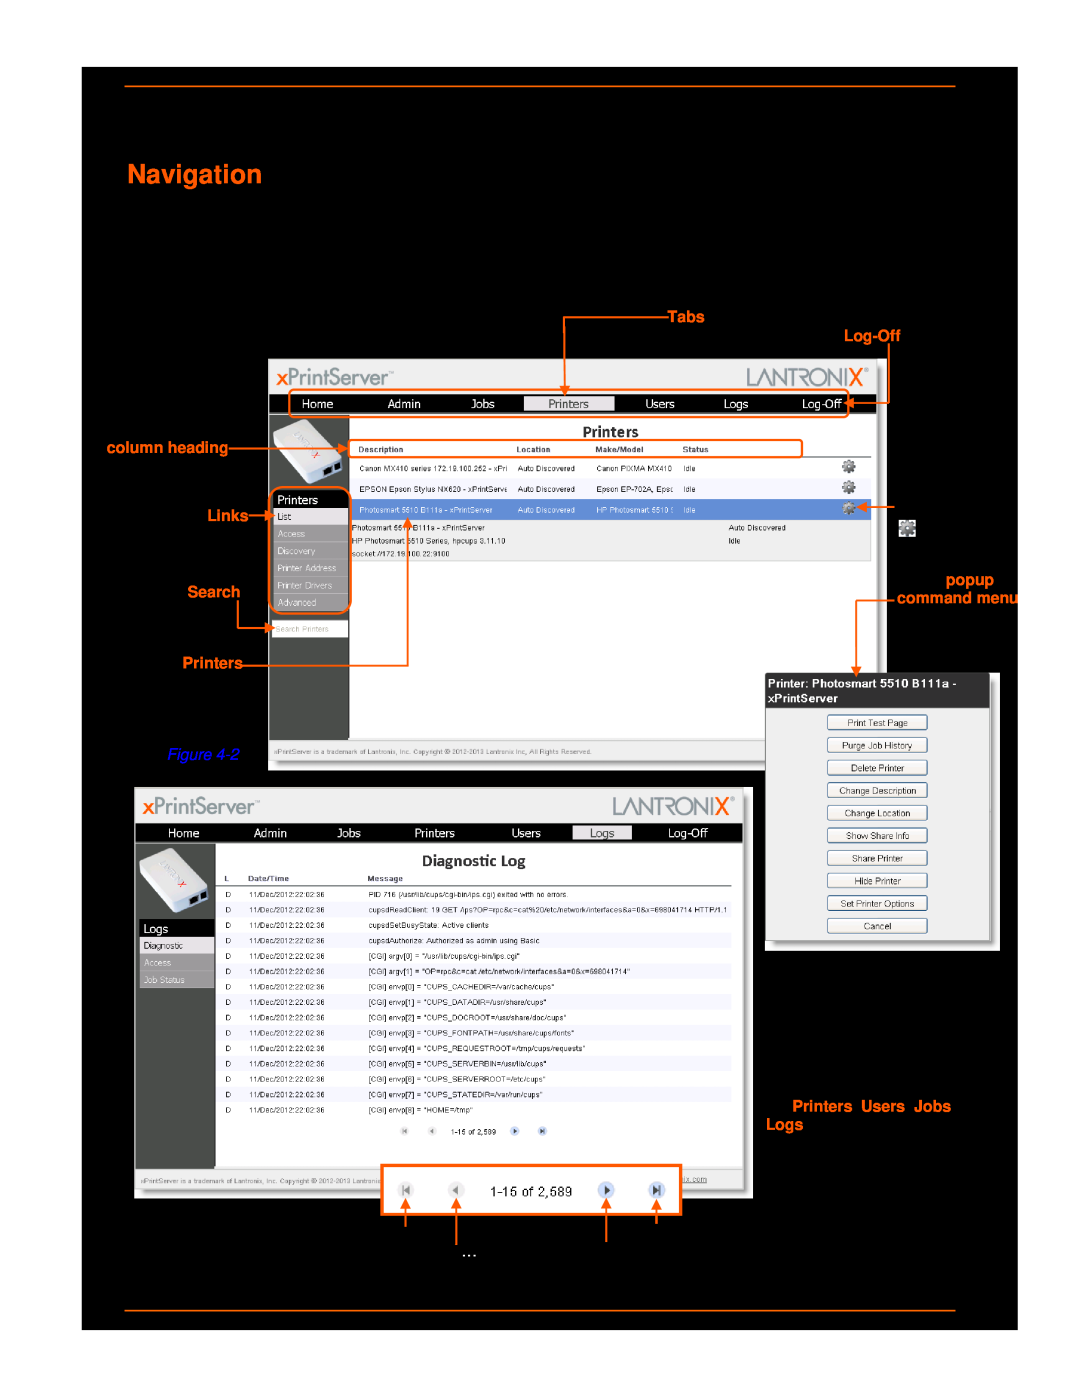 Lantronix 900-603 manual Navigation and Printing, xPrintServer User Guide, column heading Links, Search 